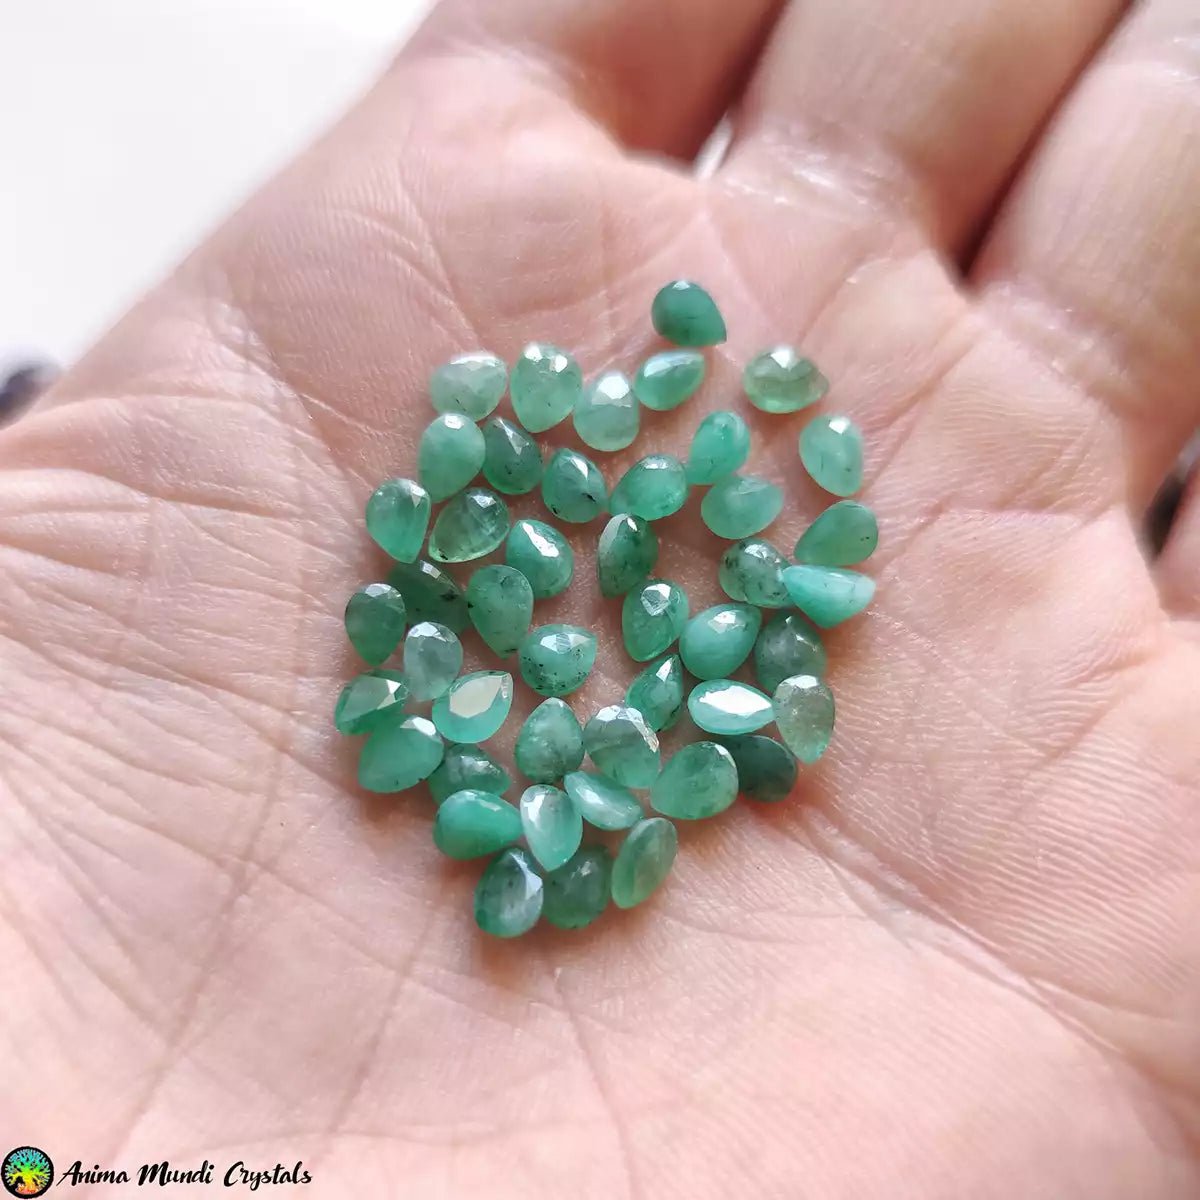 Small Emerald Pear cut Cabochons - Anima Mundi Crystals